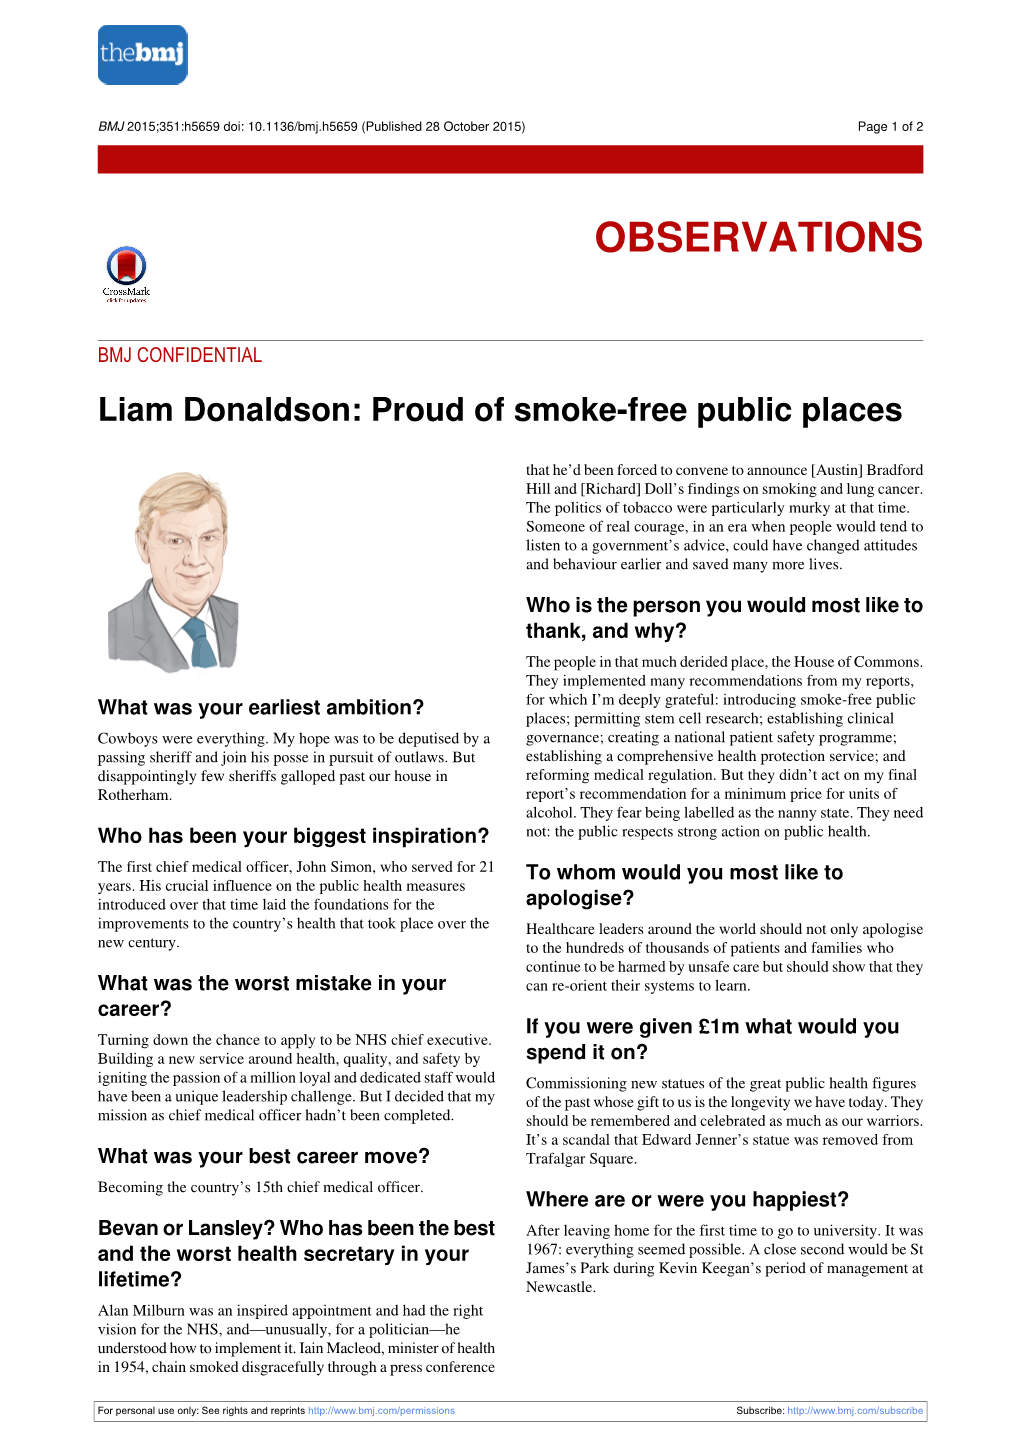 Liam Donaldson: Proud of Smoke-Free Public Places